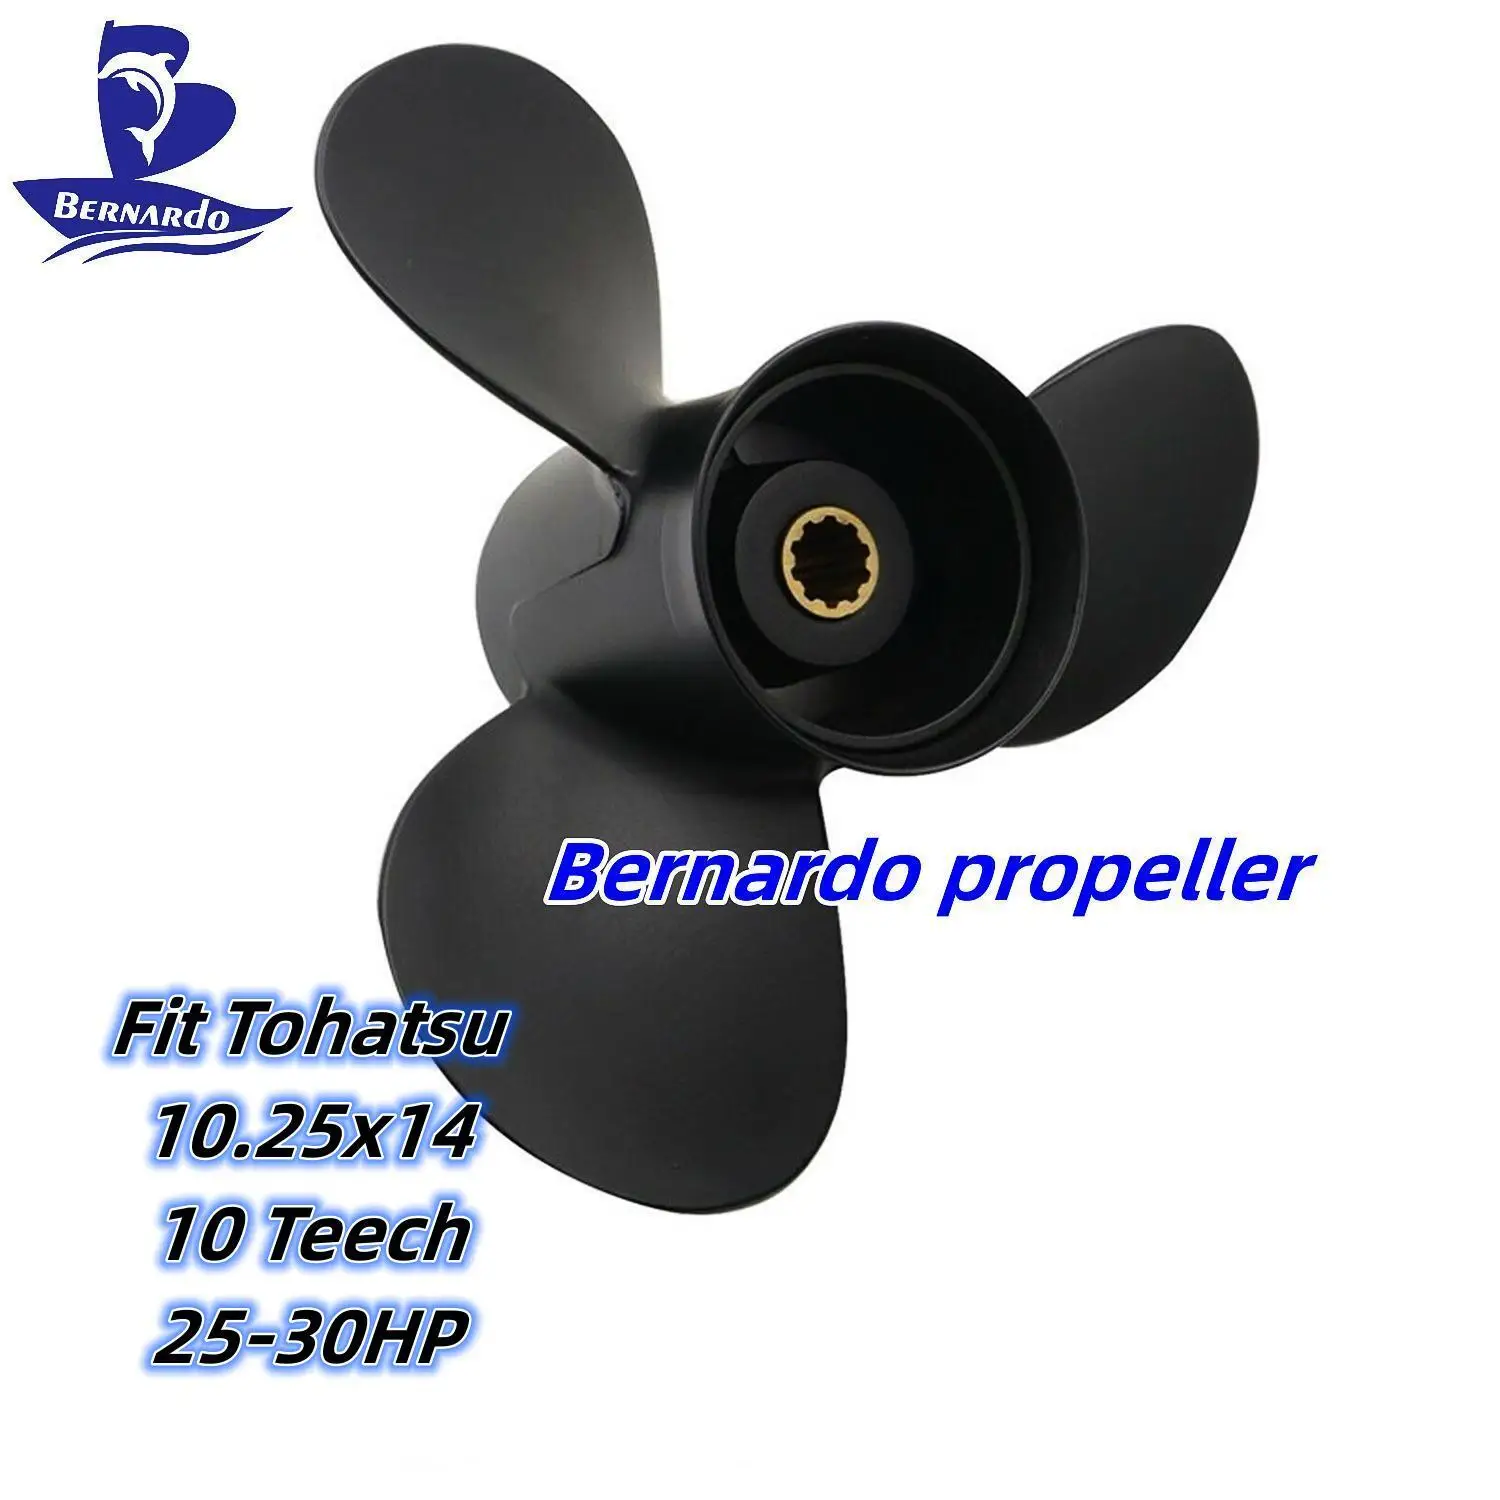 Bernardo Boat Propeller 10.25x14 Fit Tohatsu Mariner Outboard Engines 25 HP 30 HP Motor Aluminum Screw 3 Blade 10 Tooth Spline